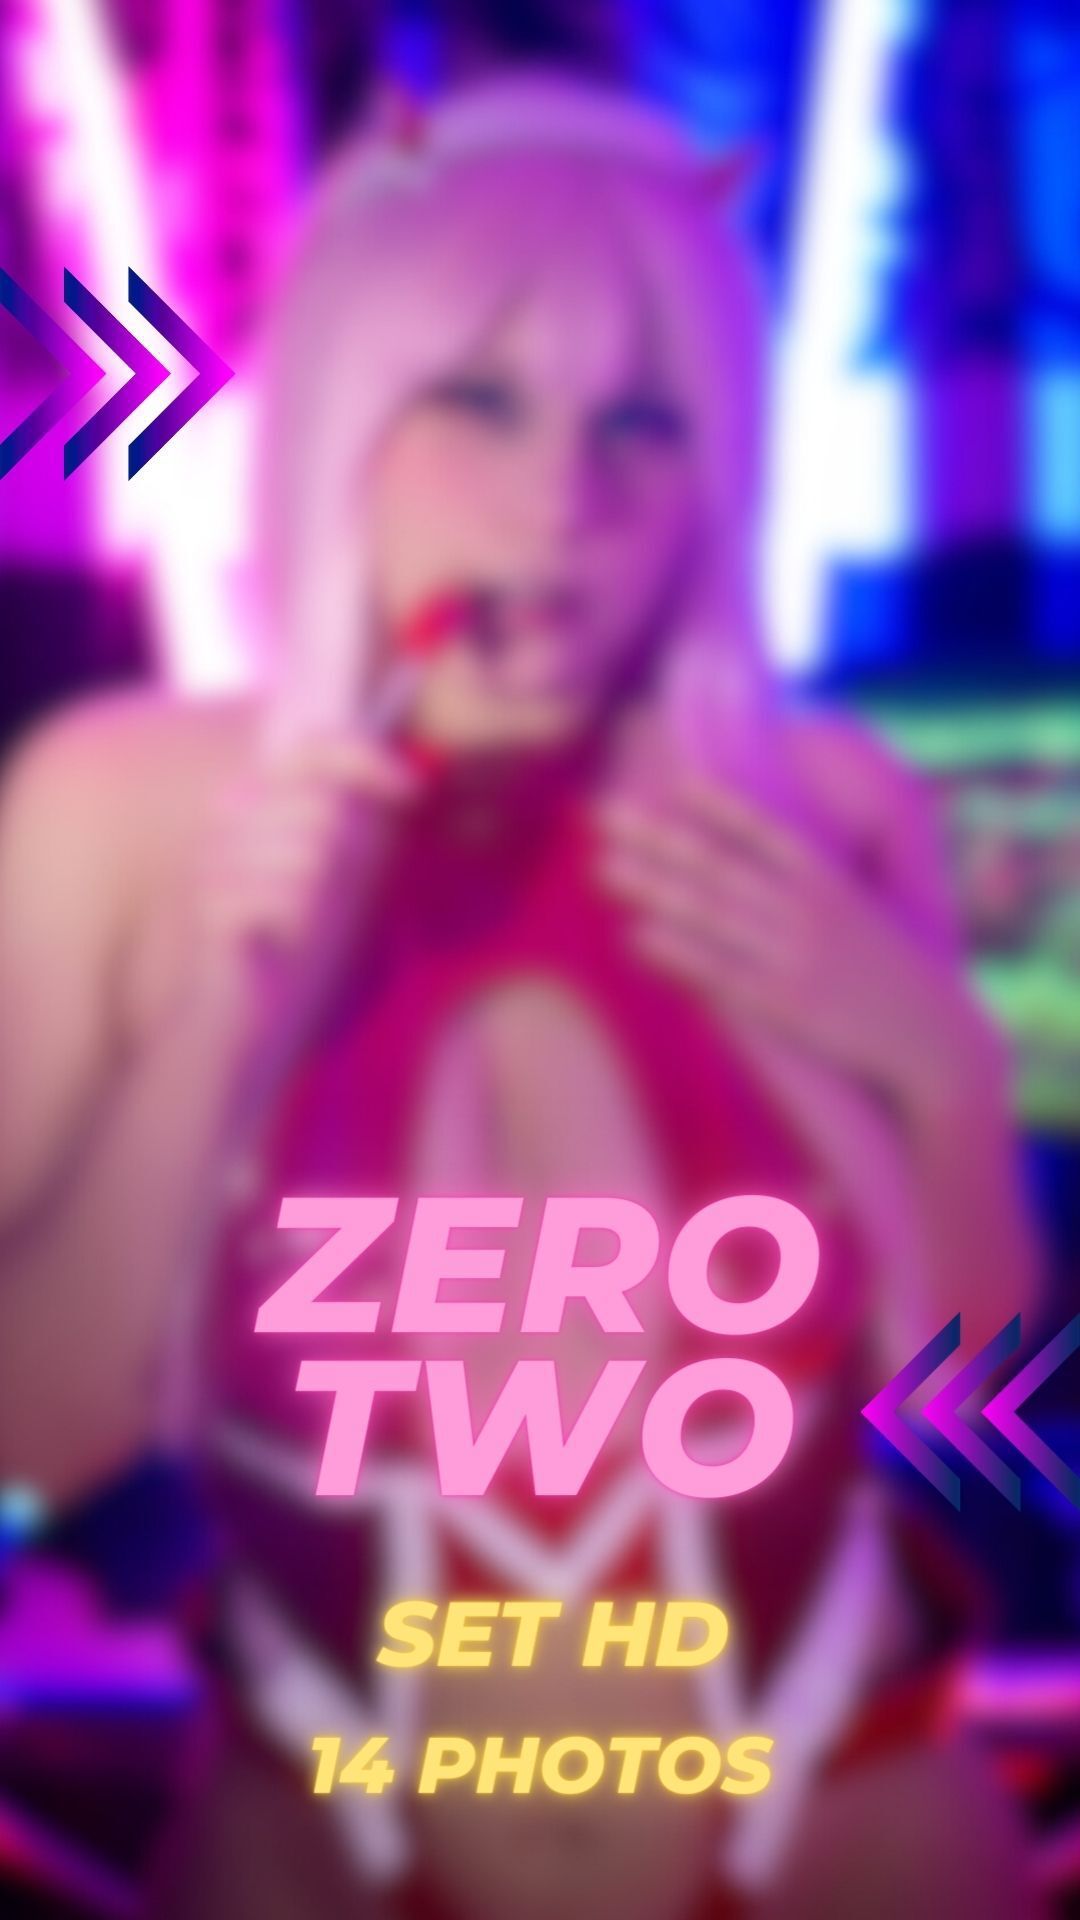 Darling ohayo! - Zero Two: Darling in the Anime